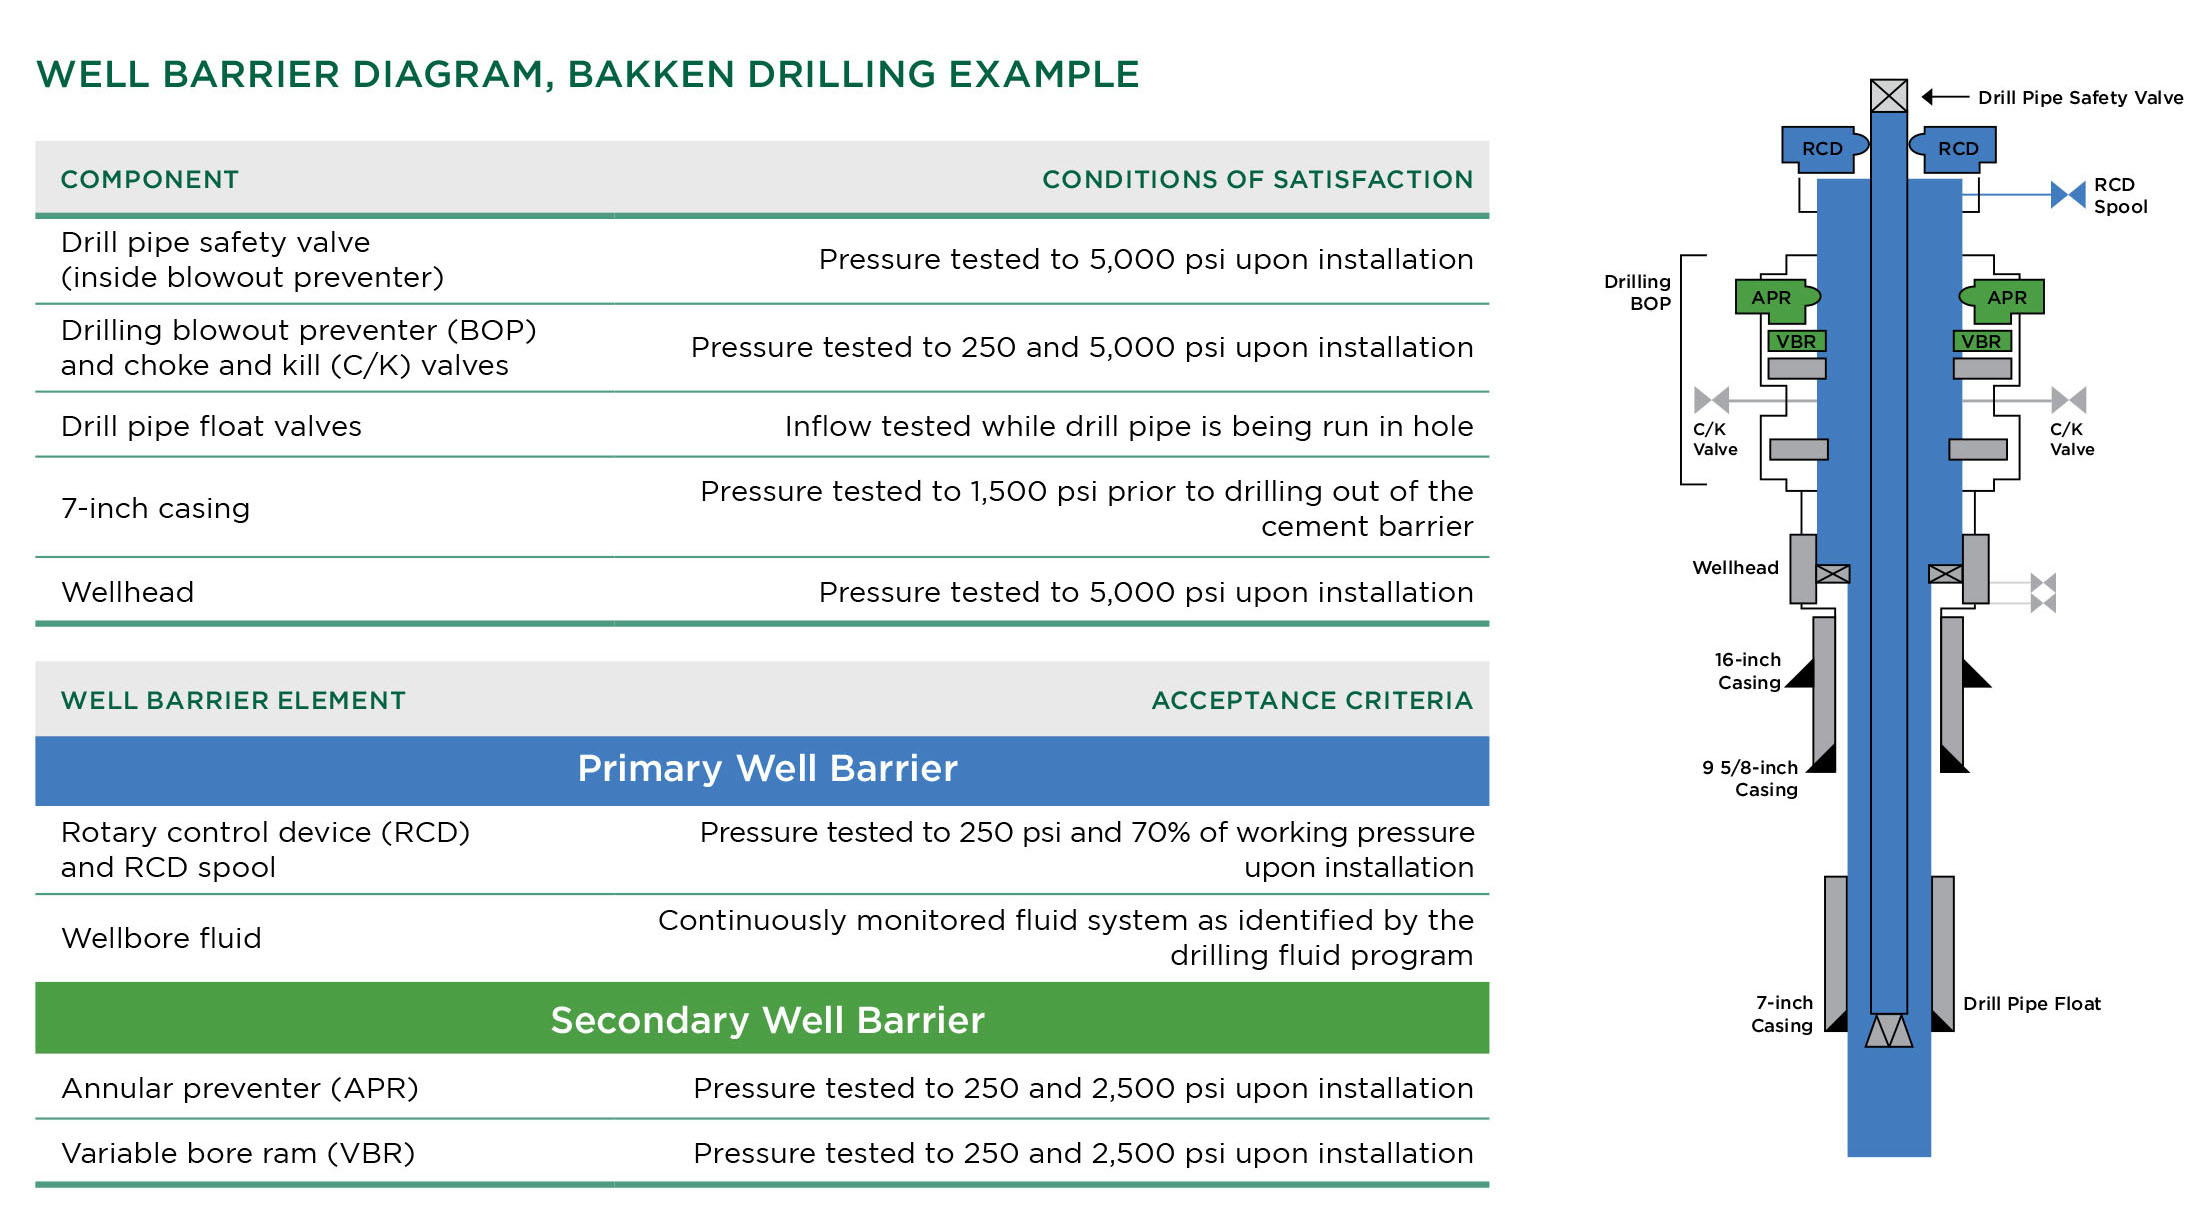 2020_Well Barrier Diagram Bakken Drilling Example_ONLINE